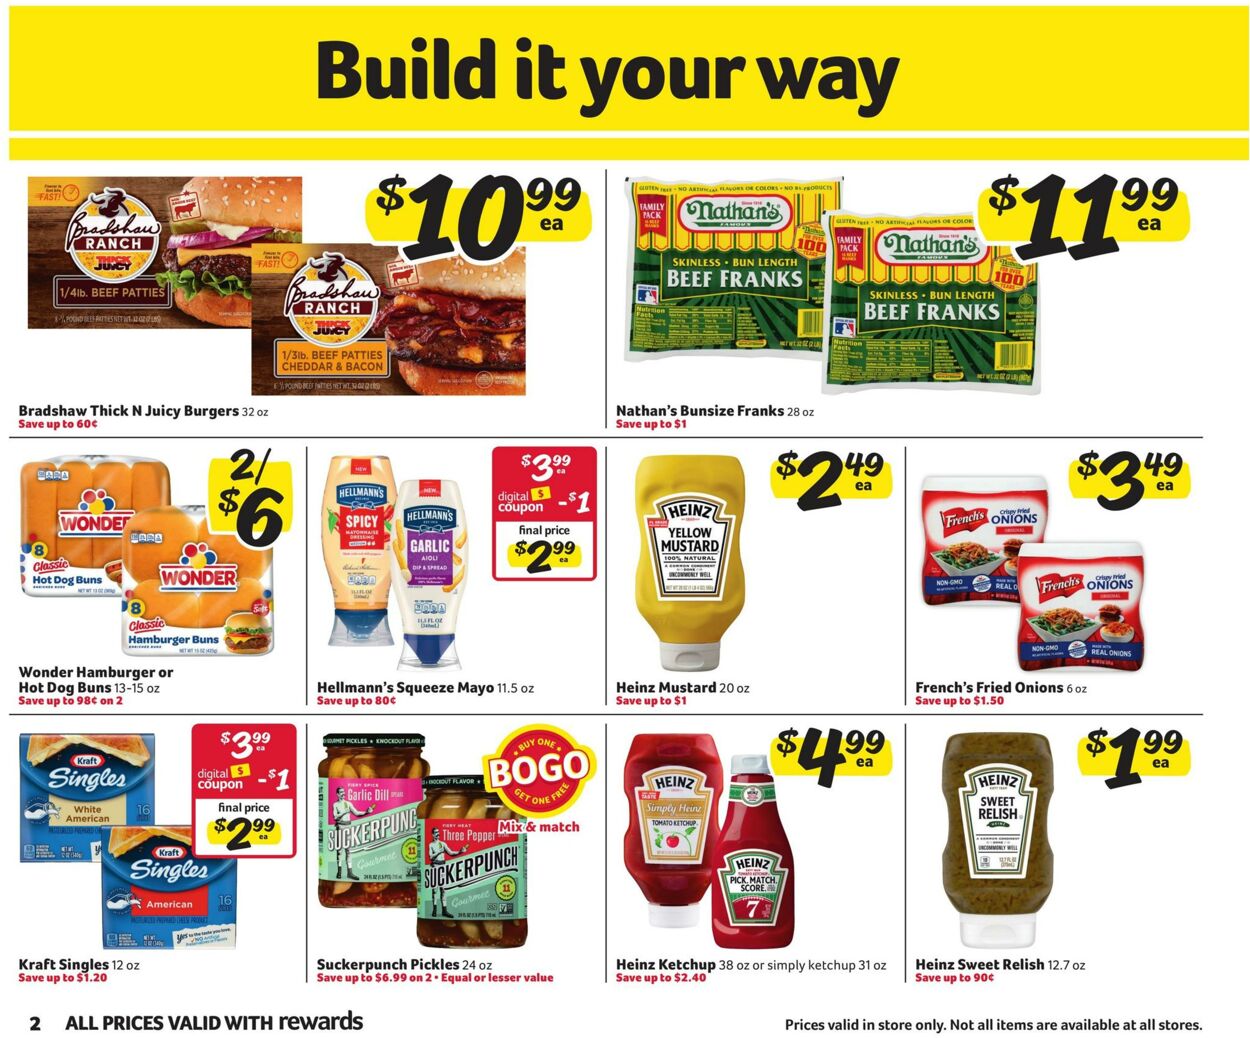 Weekly ad Harvey's Supermarkets 05/17/2023 - 05/30/2023